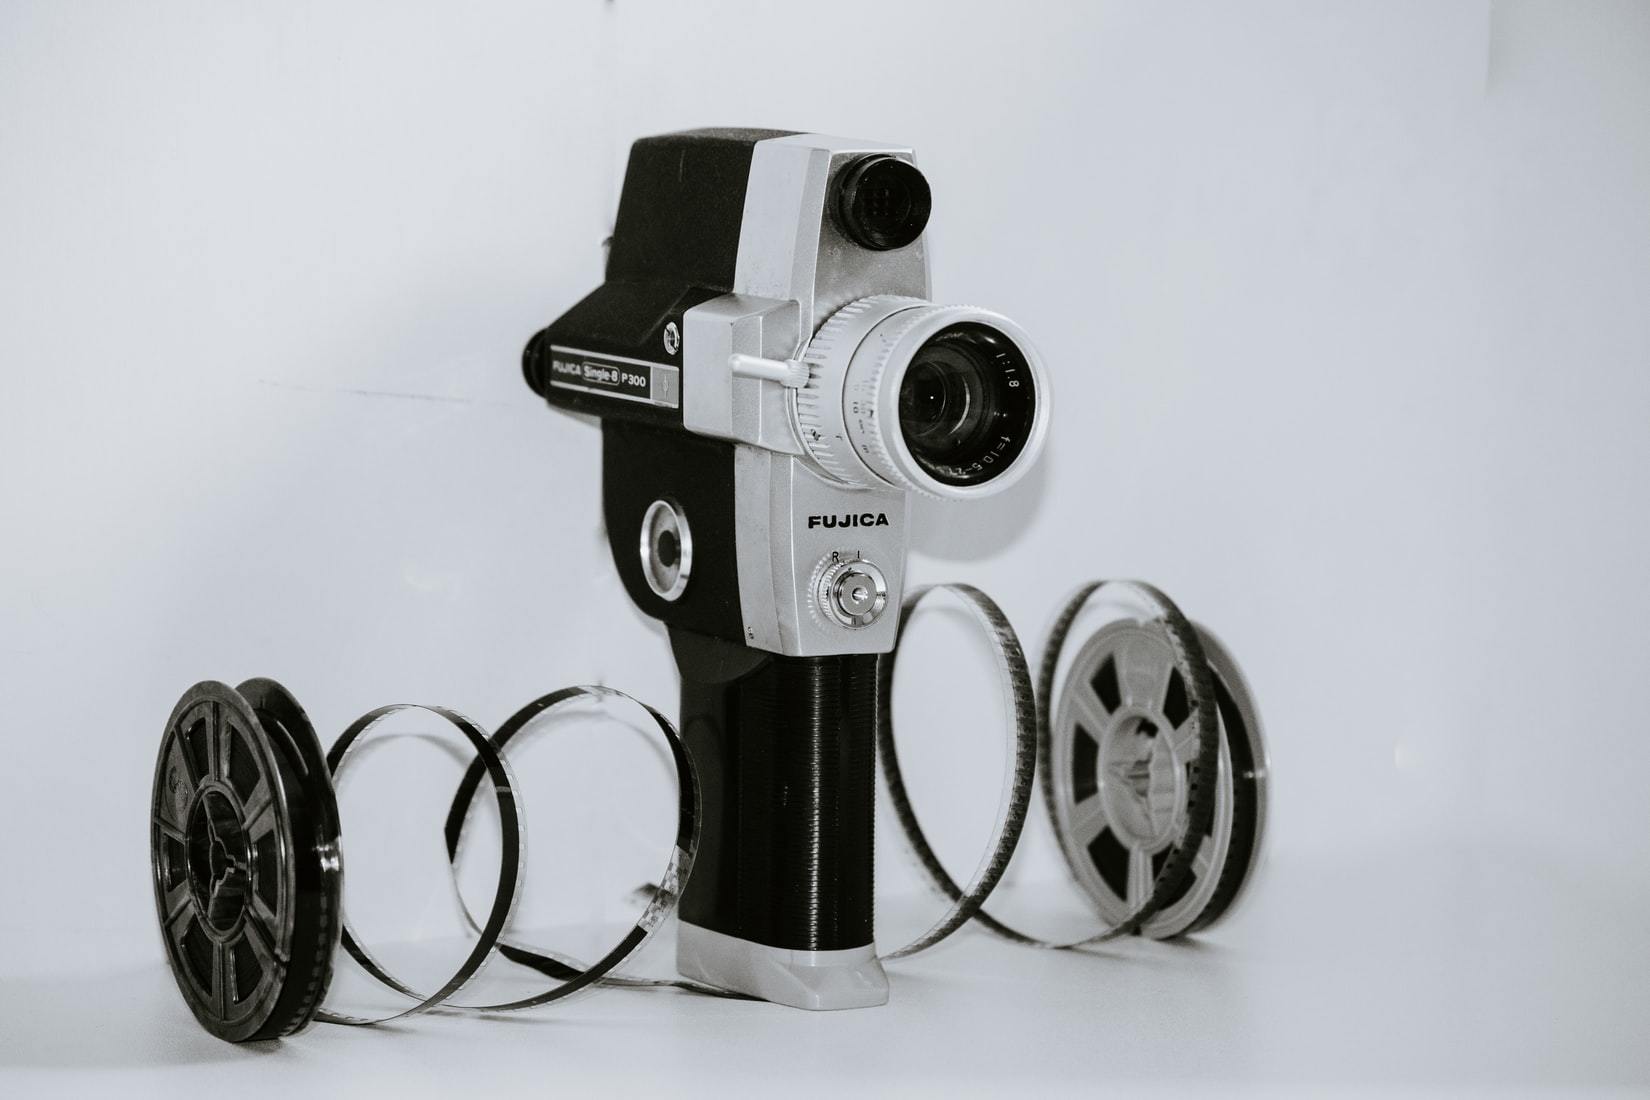 8mm Film Reel Sizes Explained for Regular & Super 8 Film Footage – Legacybox